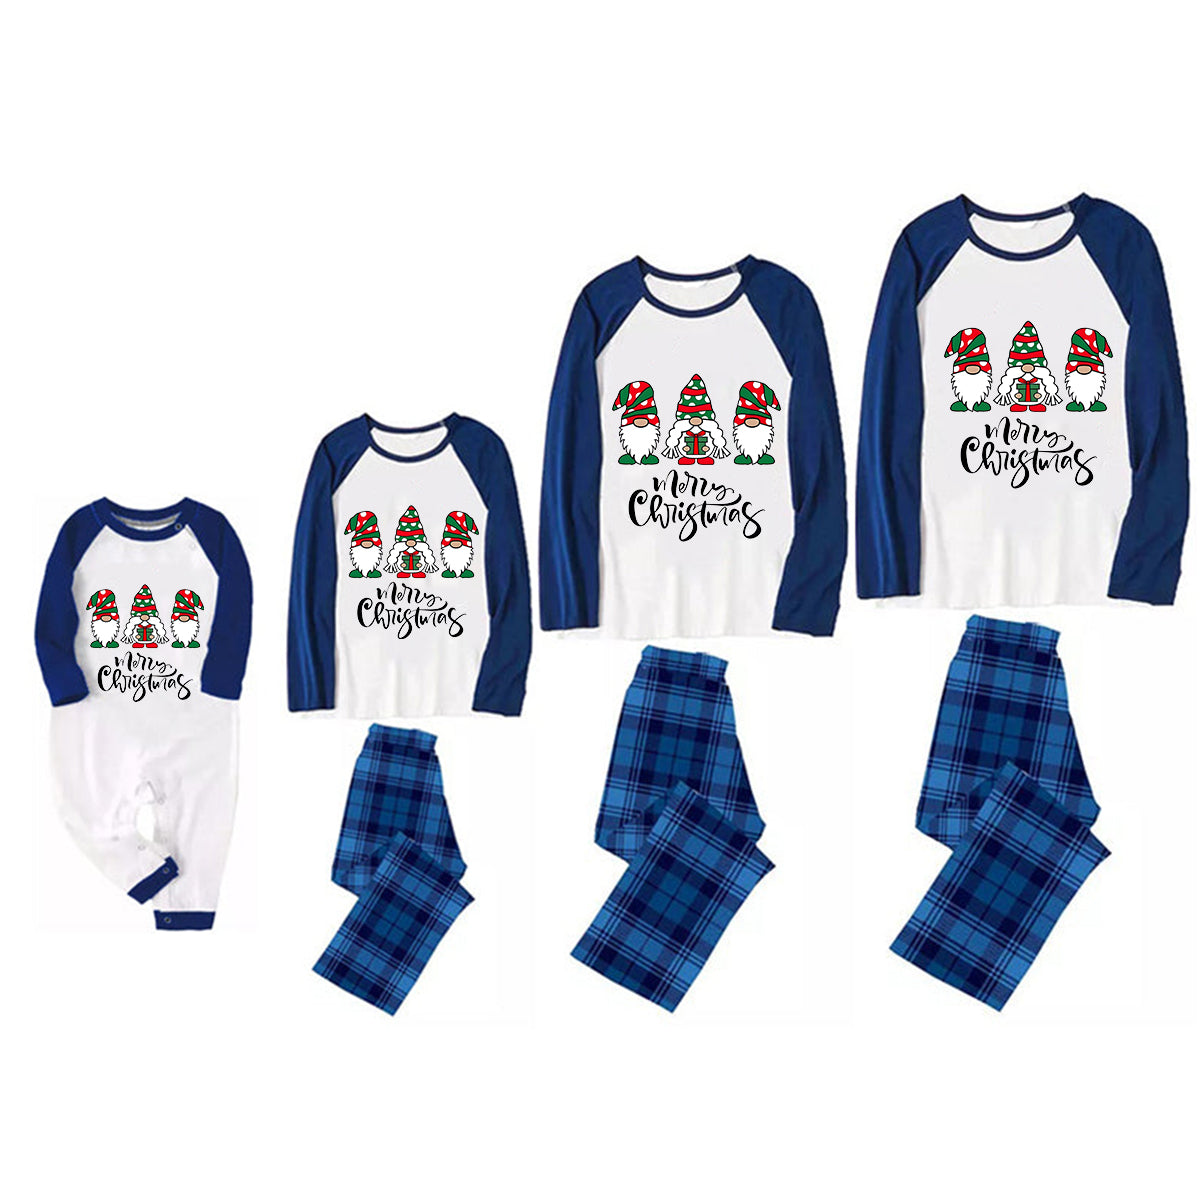 Merry Christmas Cute Gnome Print Casual Long Sleeve Sweatshirts Blue Sleeve Contrast Tops and Blue Plaid Pants Family Matching Pajamas Sets With Dog Bandan